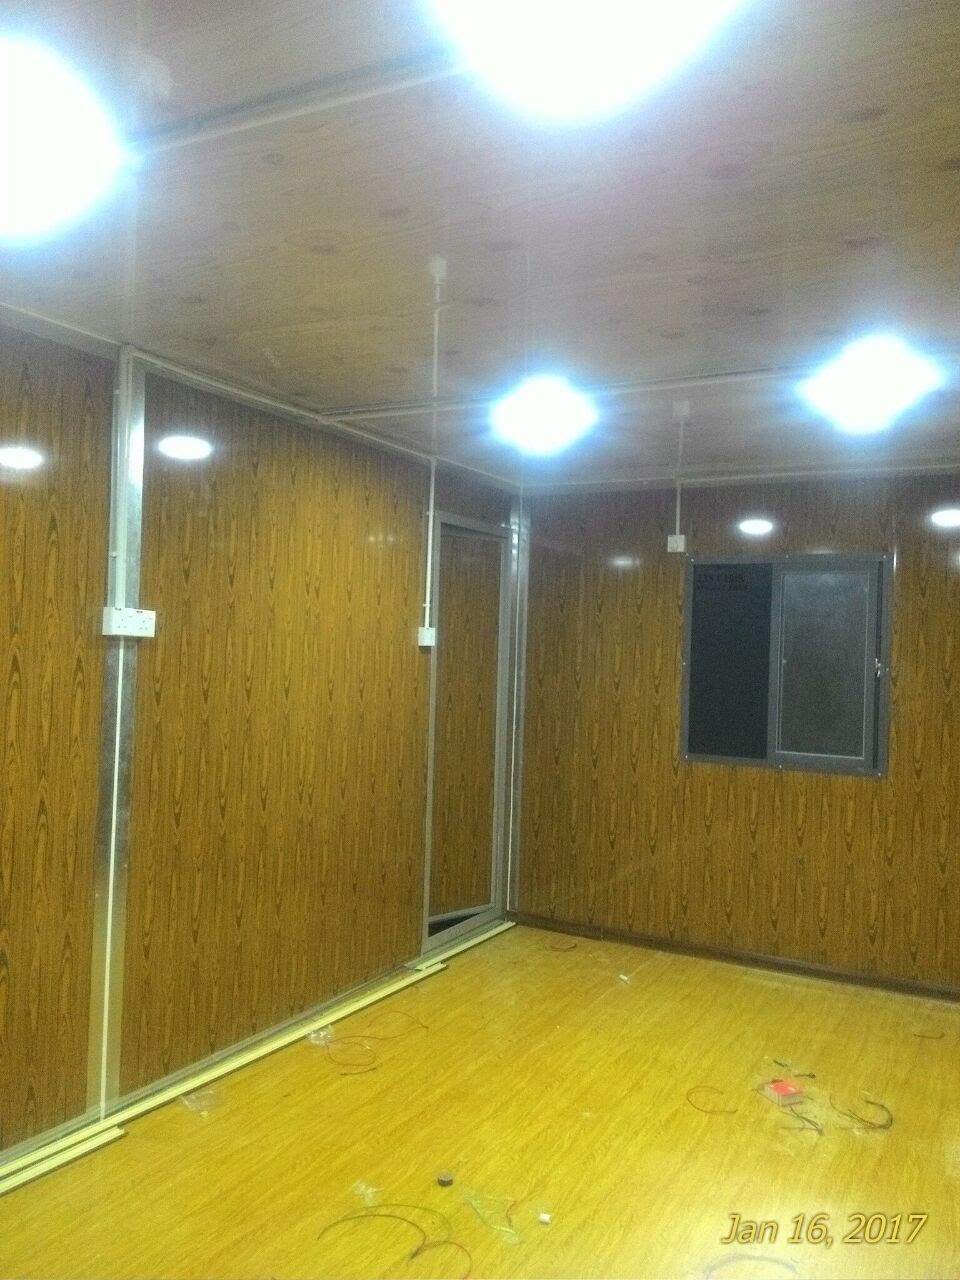 Wood Grain Texture Walling Cabin